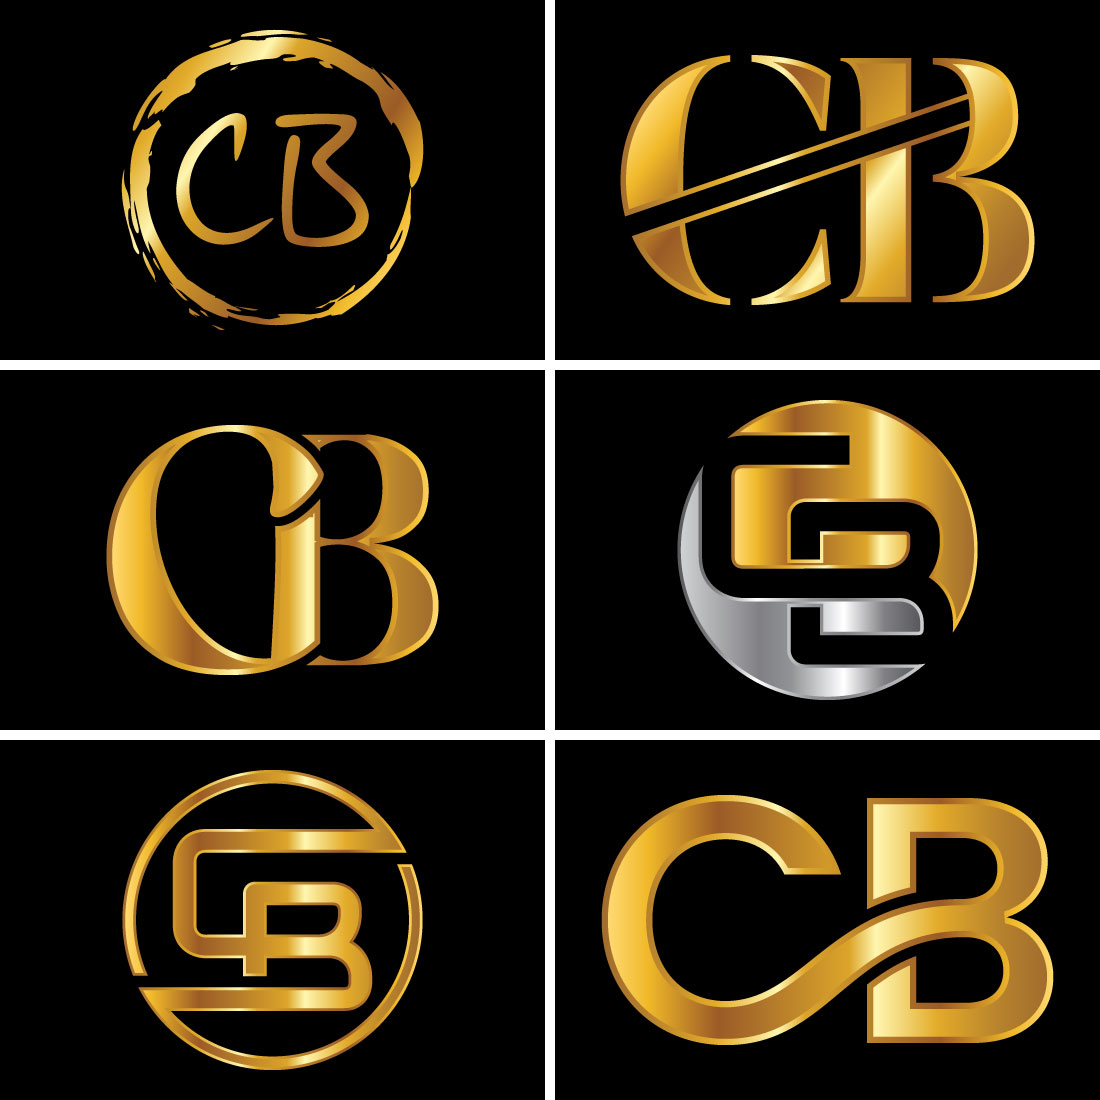 C B Initial Letter Logo Design, Graphic Alphabet Symbol for Corporate Business Identity main cover.